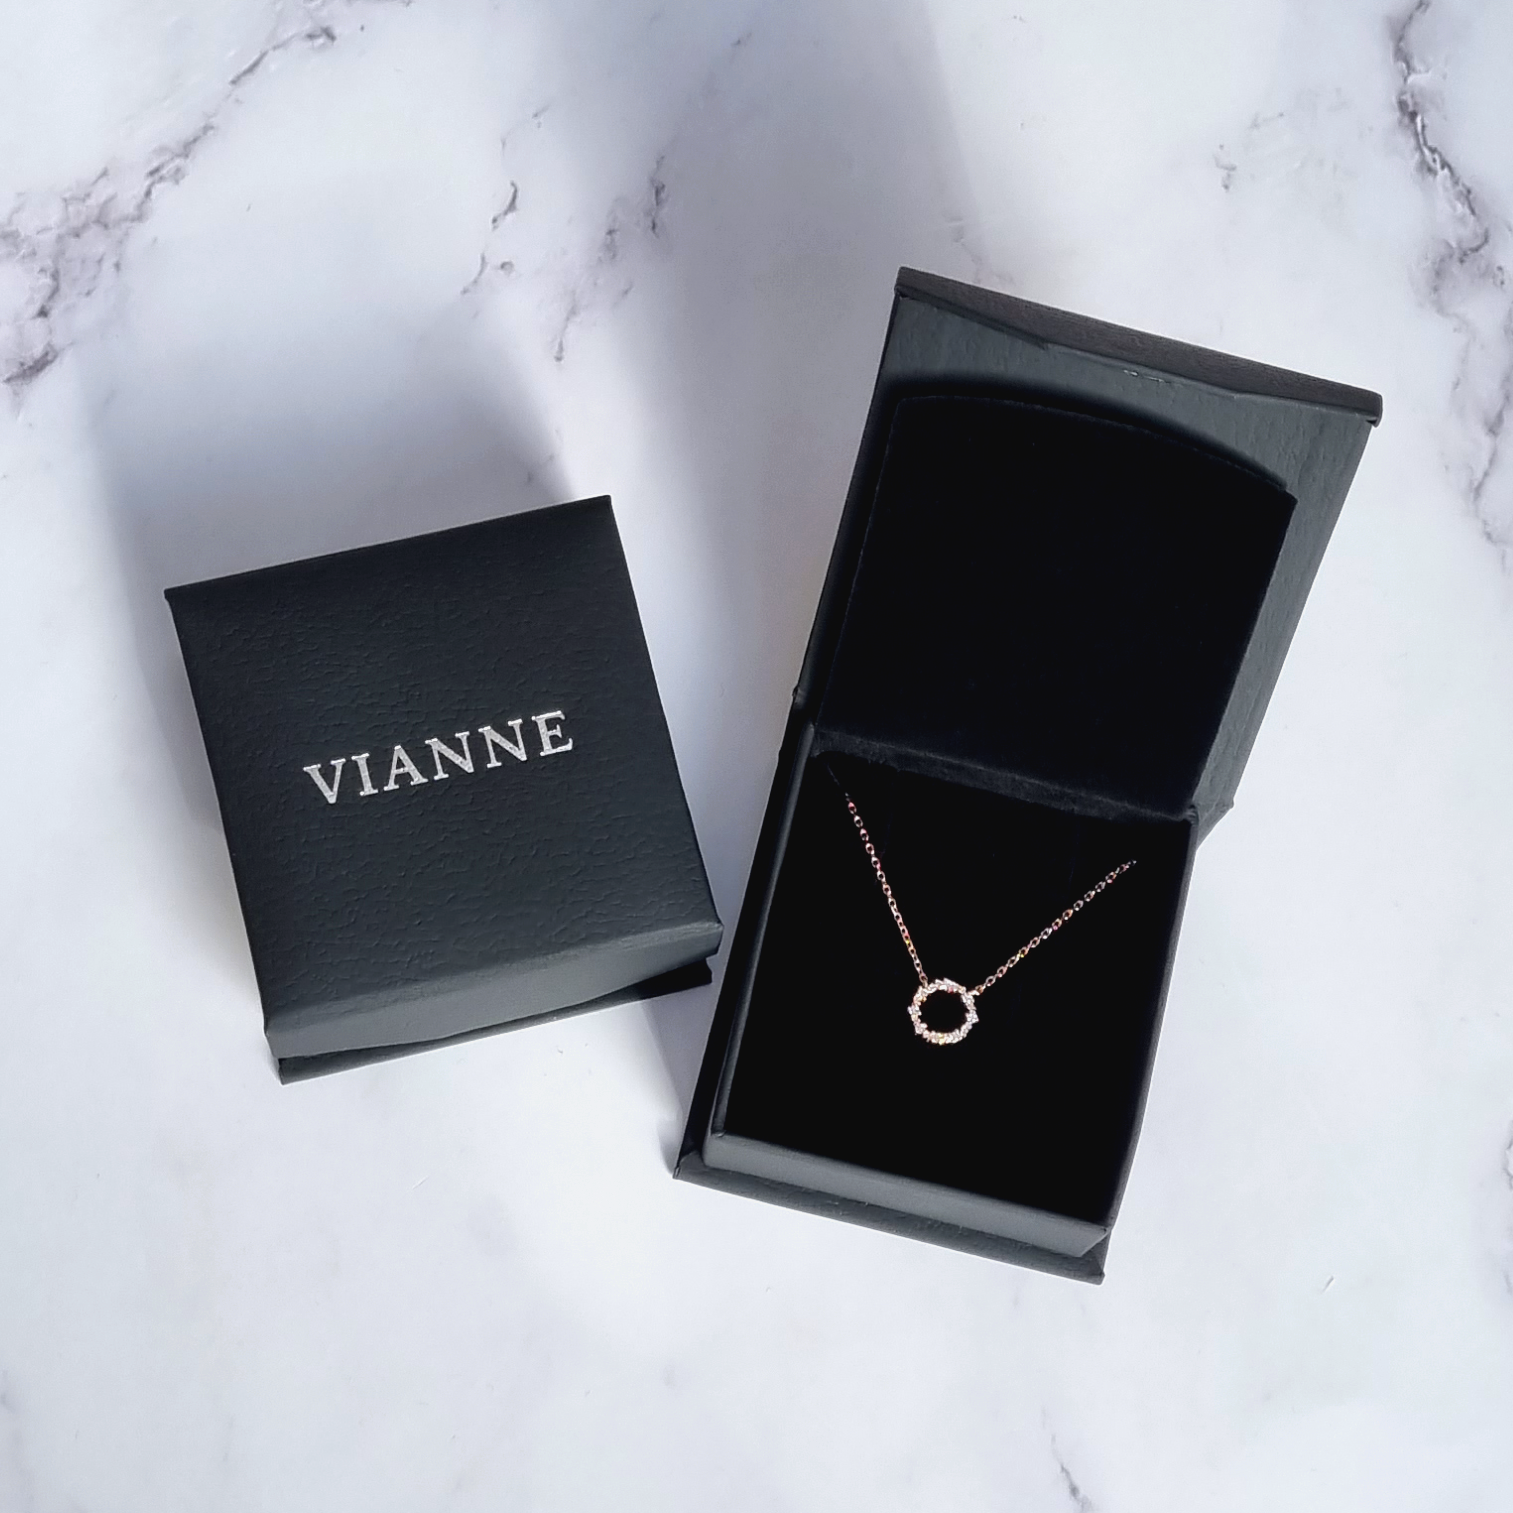 Vianne Jewellery Necklace box